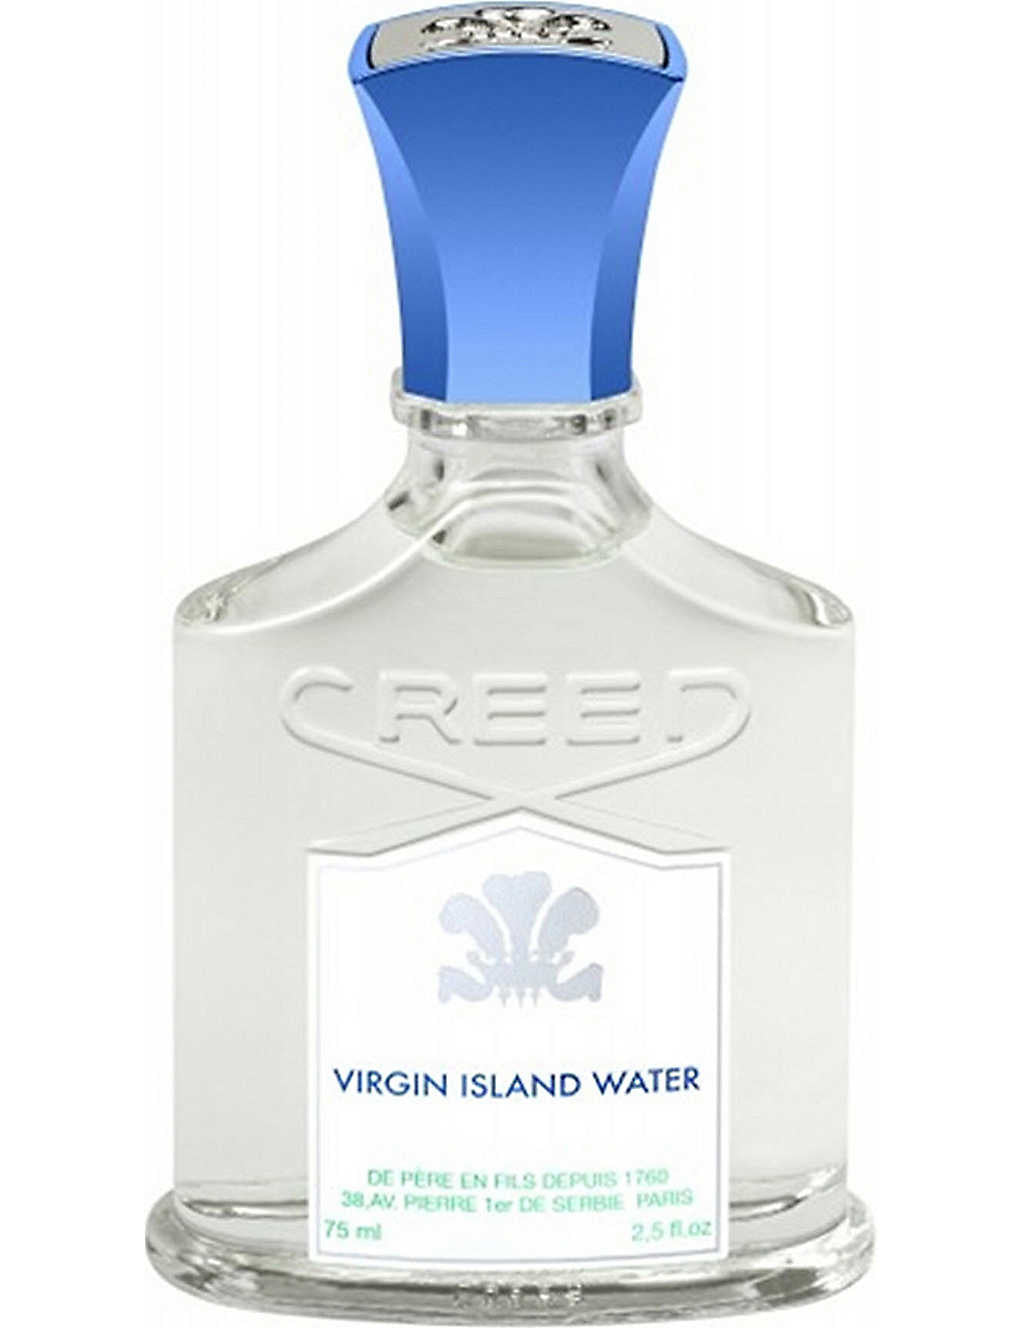 Virgin Island Water - aoperfume